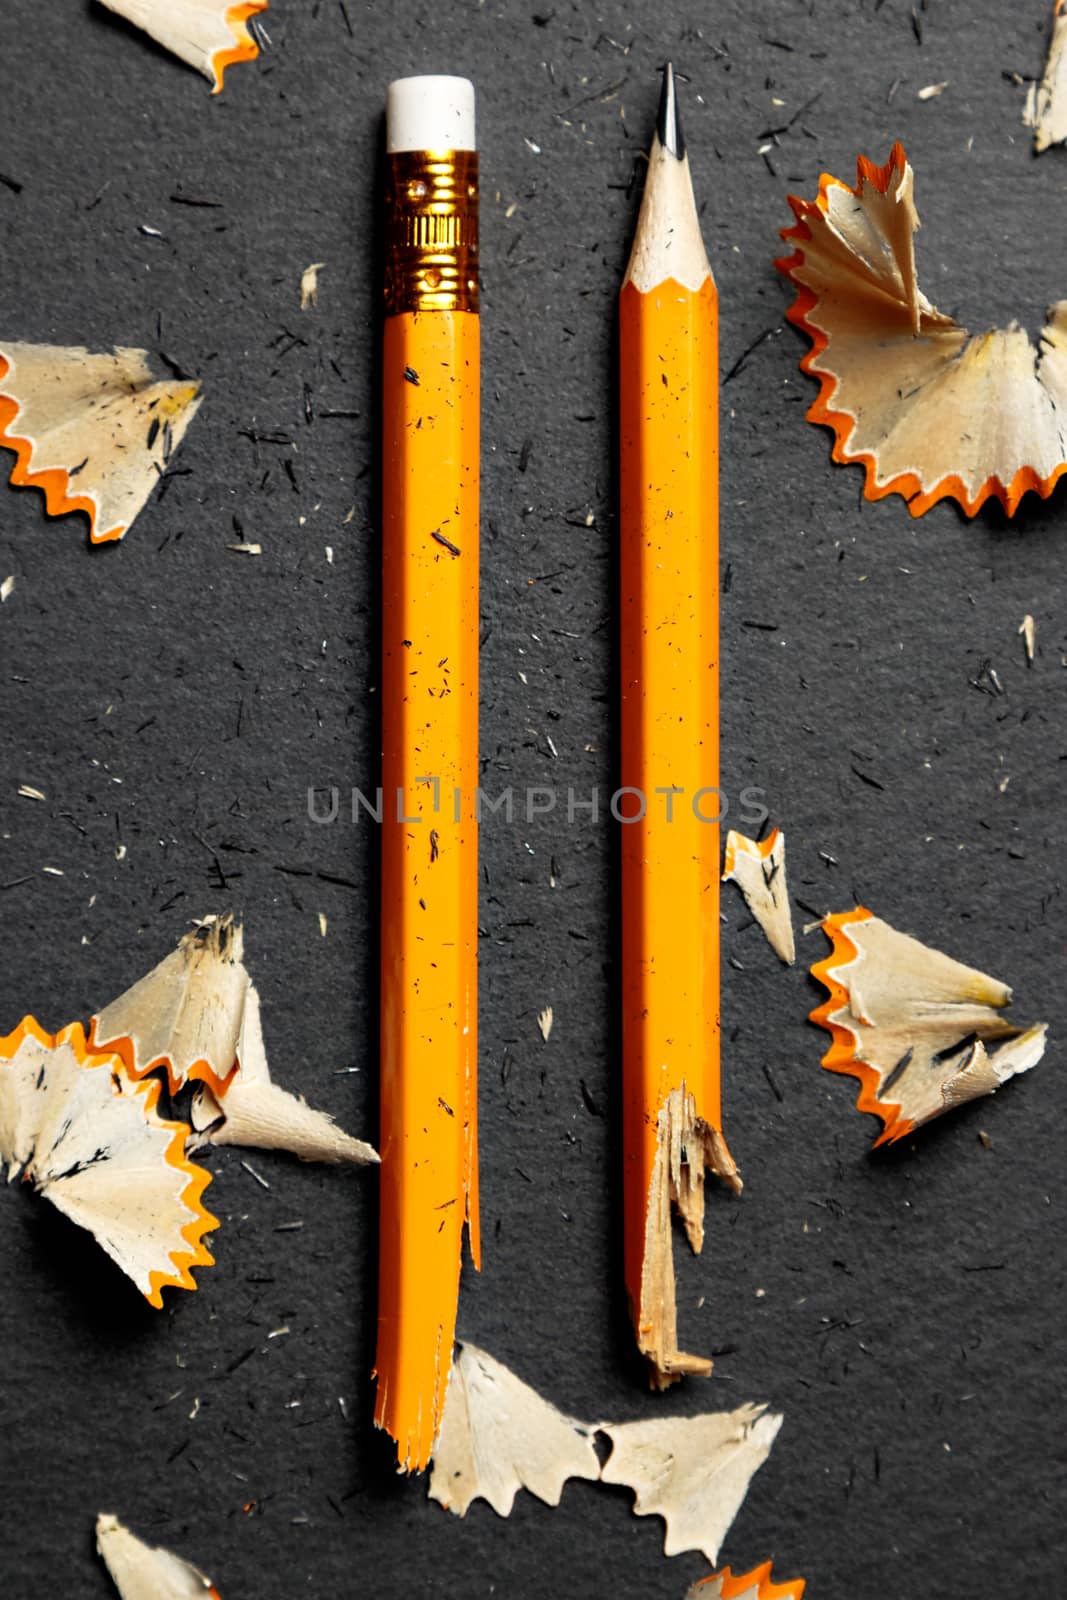 Broken pencil with shavings on black background. Vertical image.